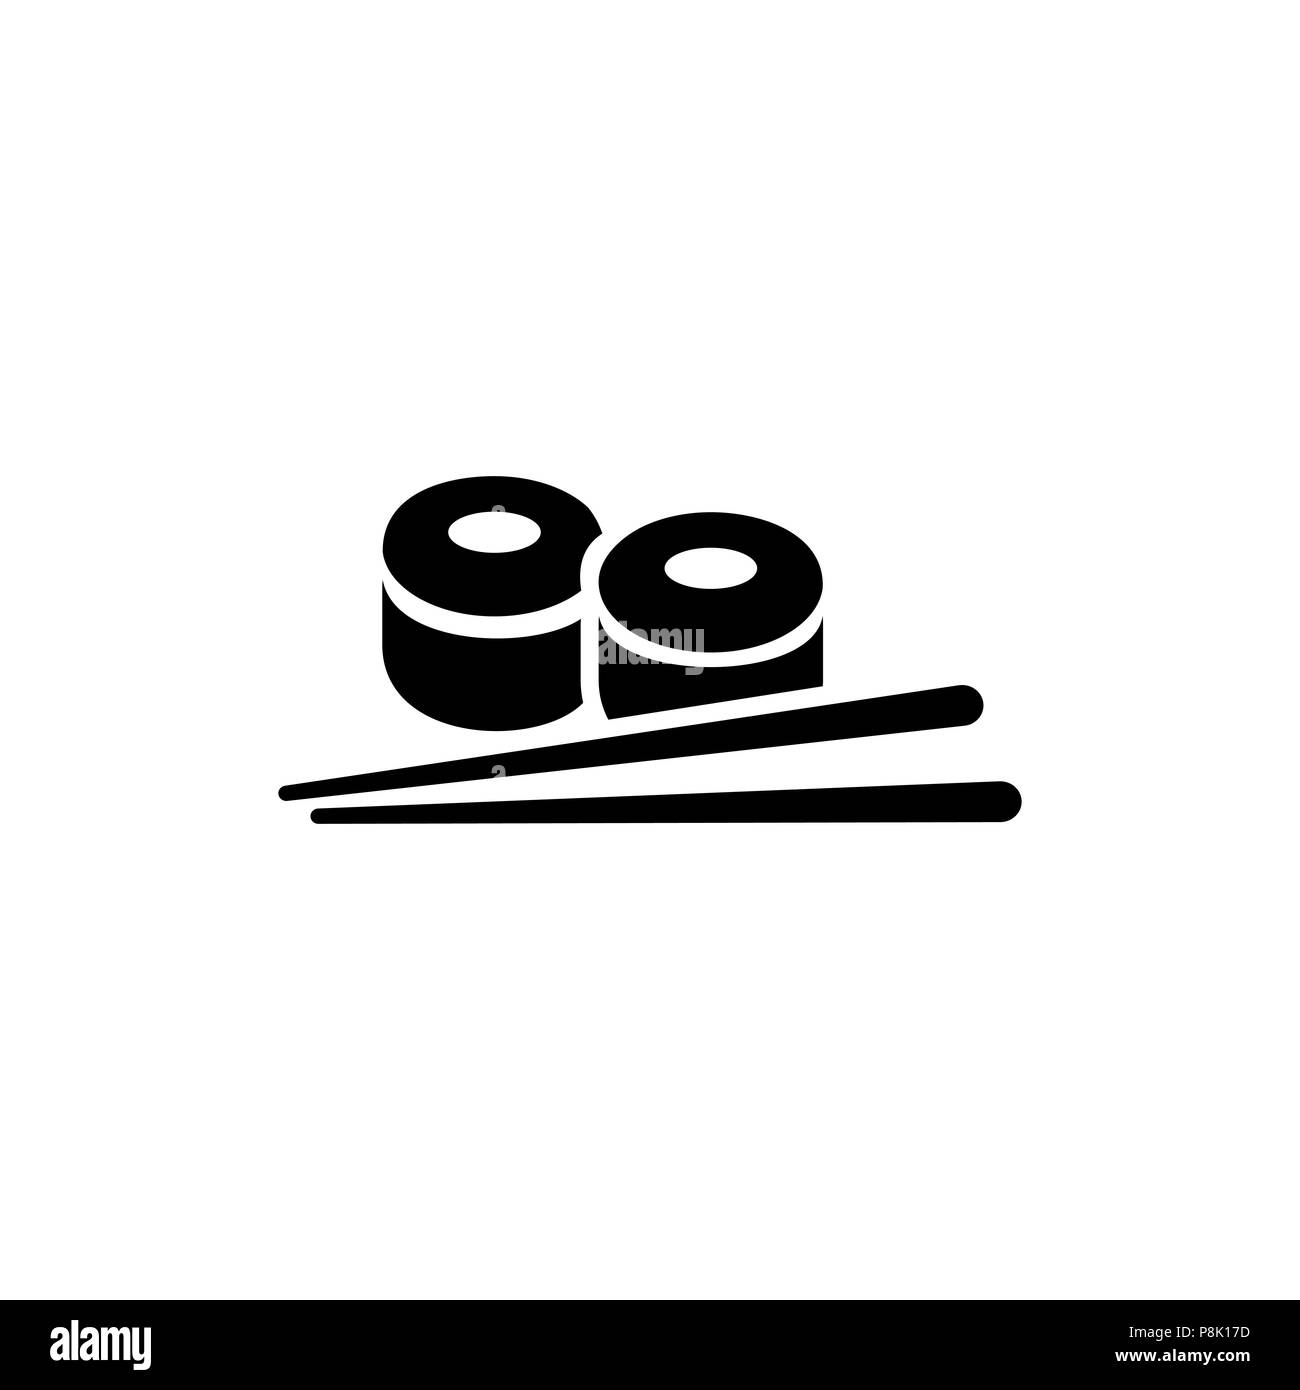 Sushi icon simple flat style illustration image. Stock Vector